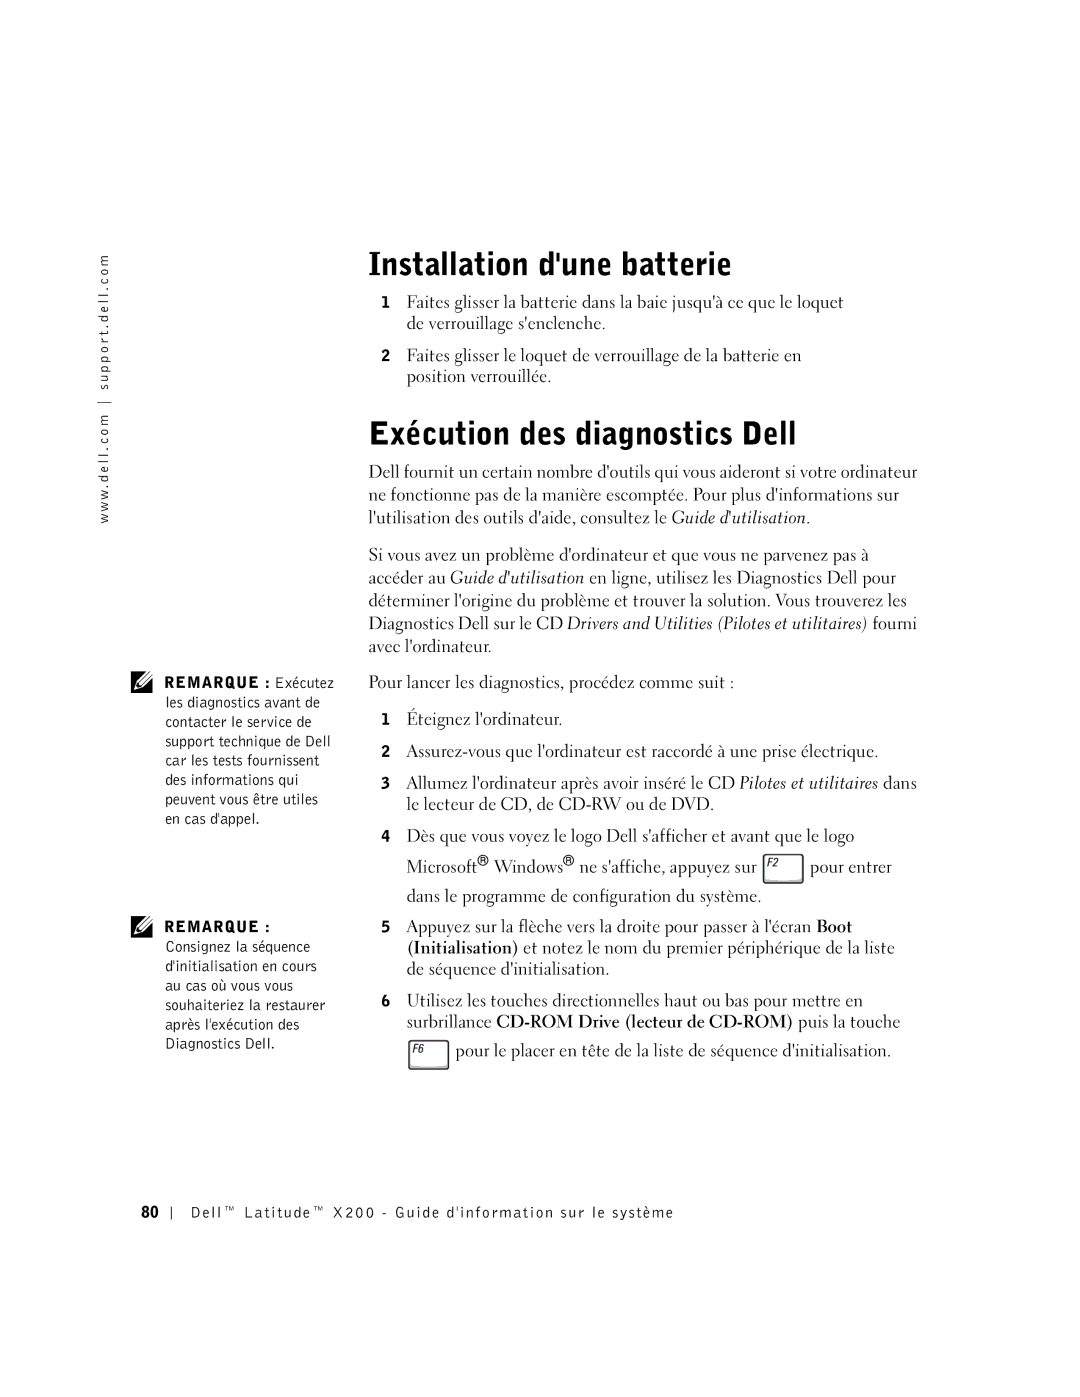 LeapFrog PP03S manual Installation dune batterie, Exécution des diagnostics Dell 